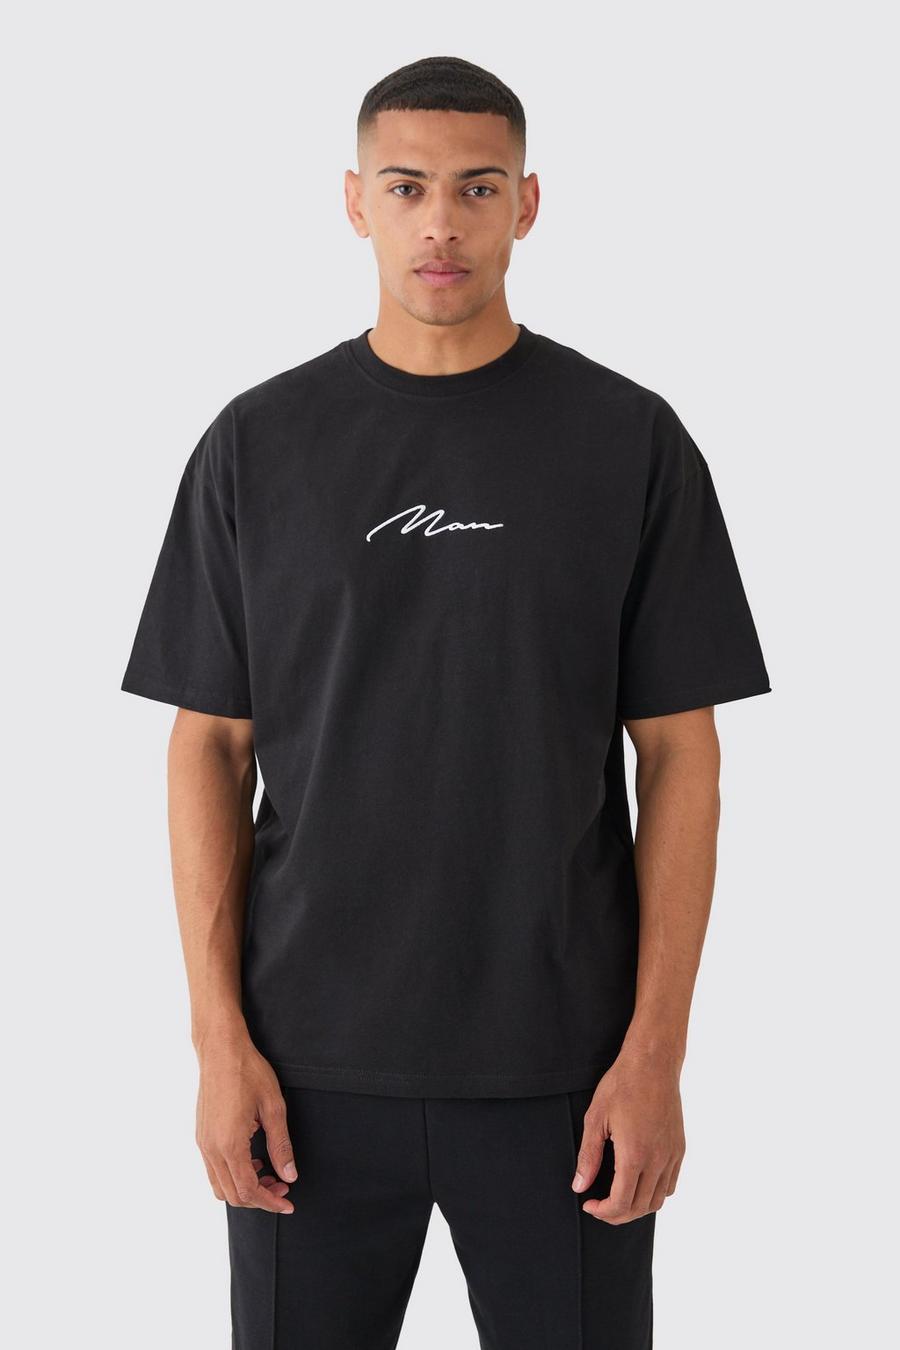 Camiseta con firma MAN bordada, Black